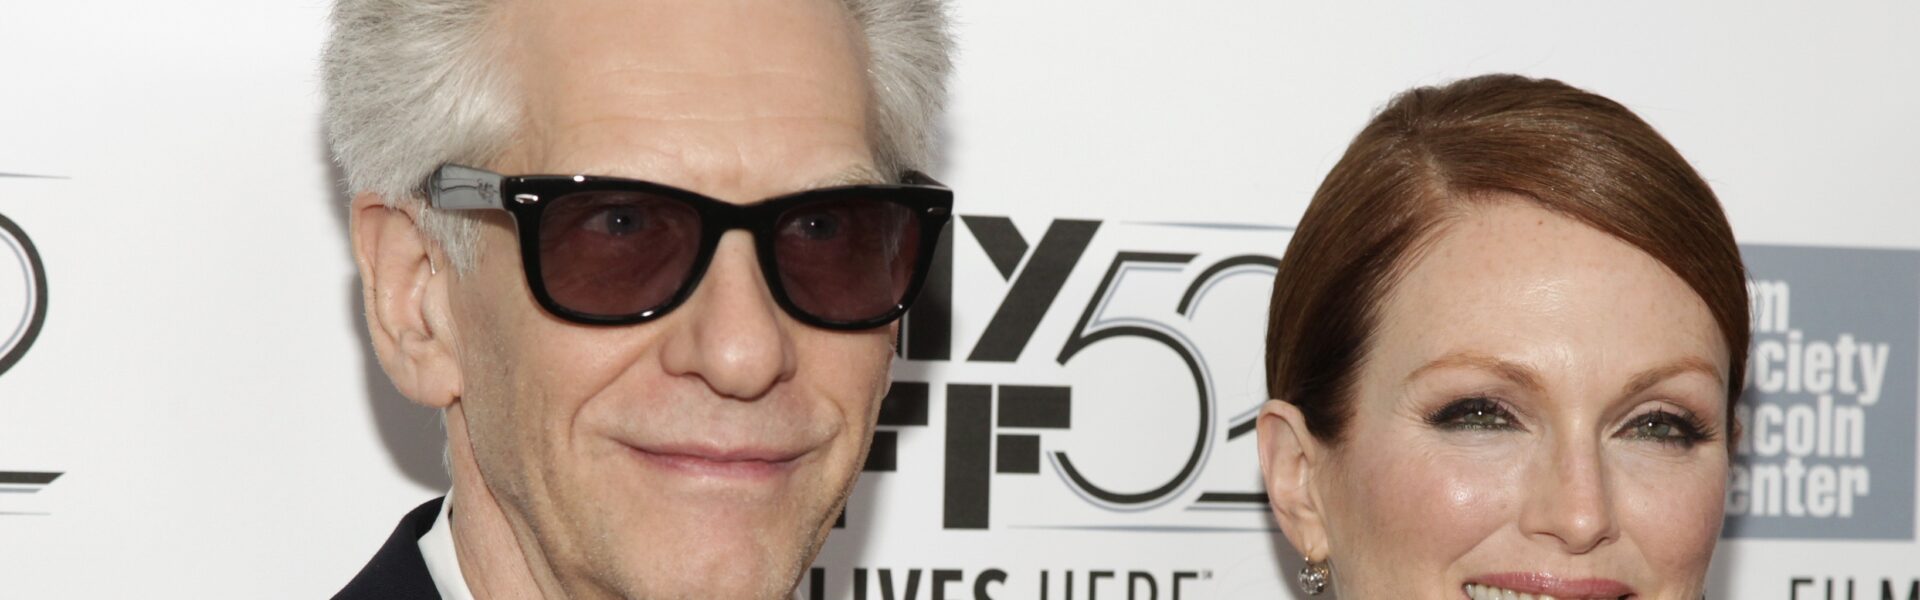 cronenberg casts pattinson in nasty and disturbing new film moviescope